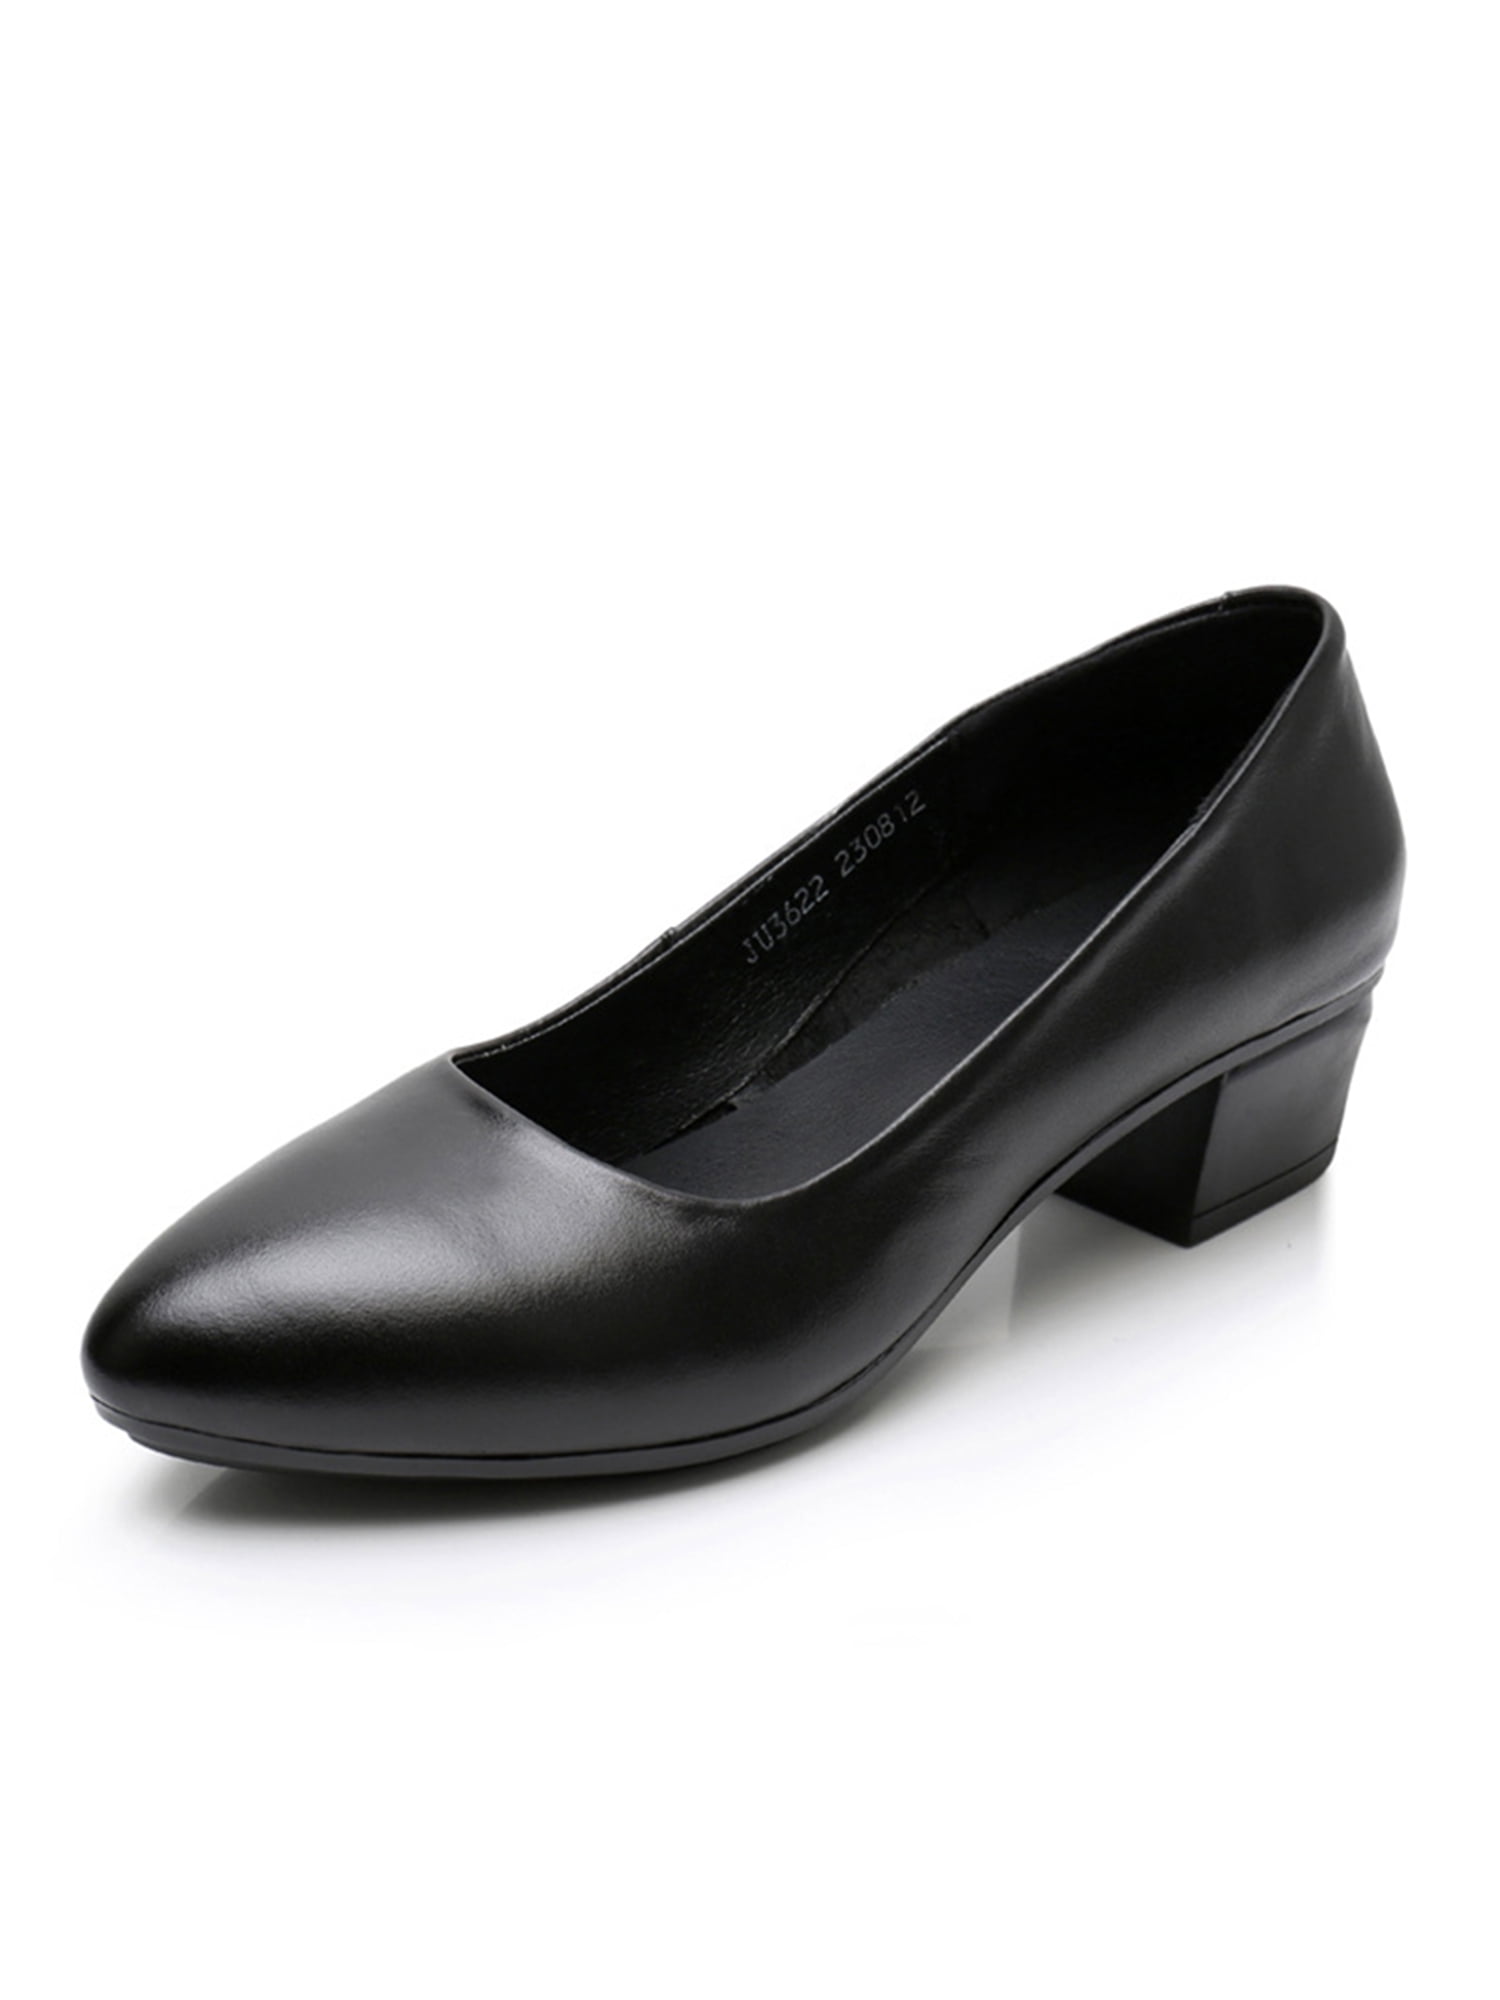 Calla | Ava | Black Leather | Kitten heeled dress shoes